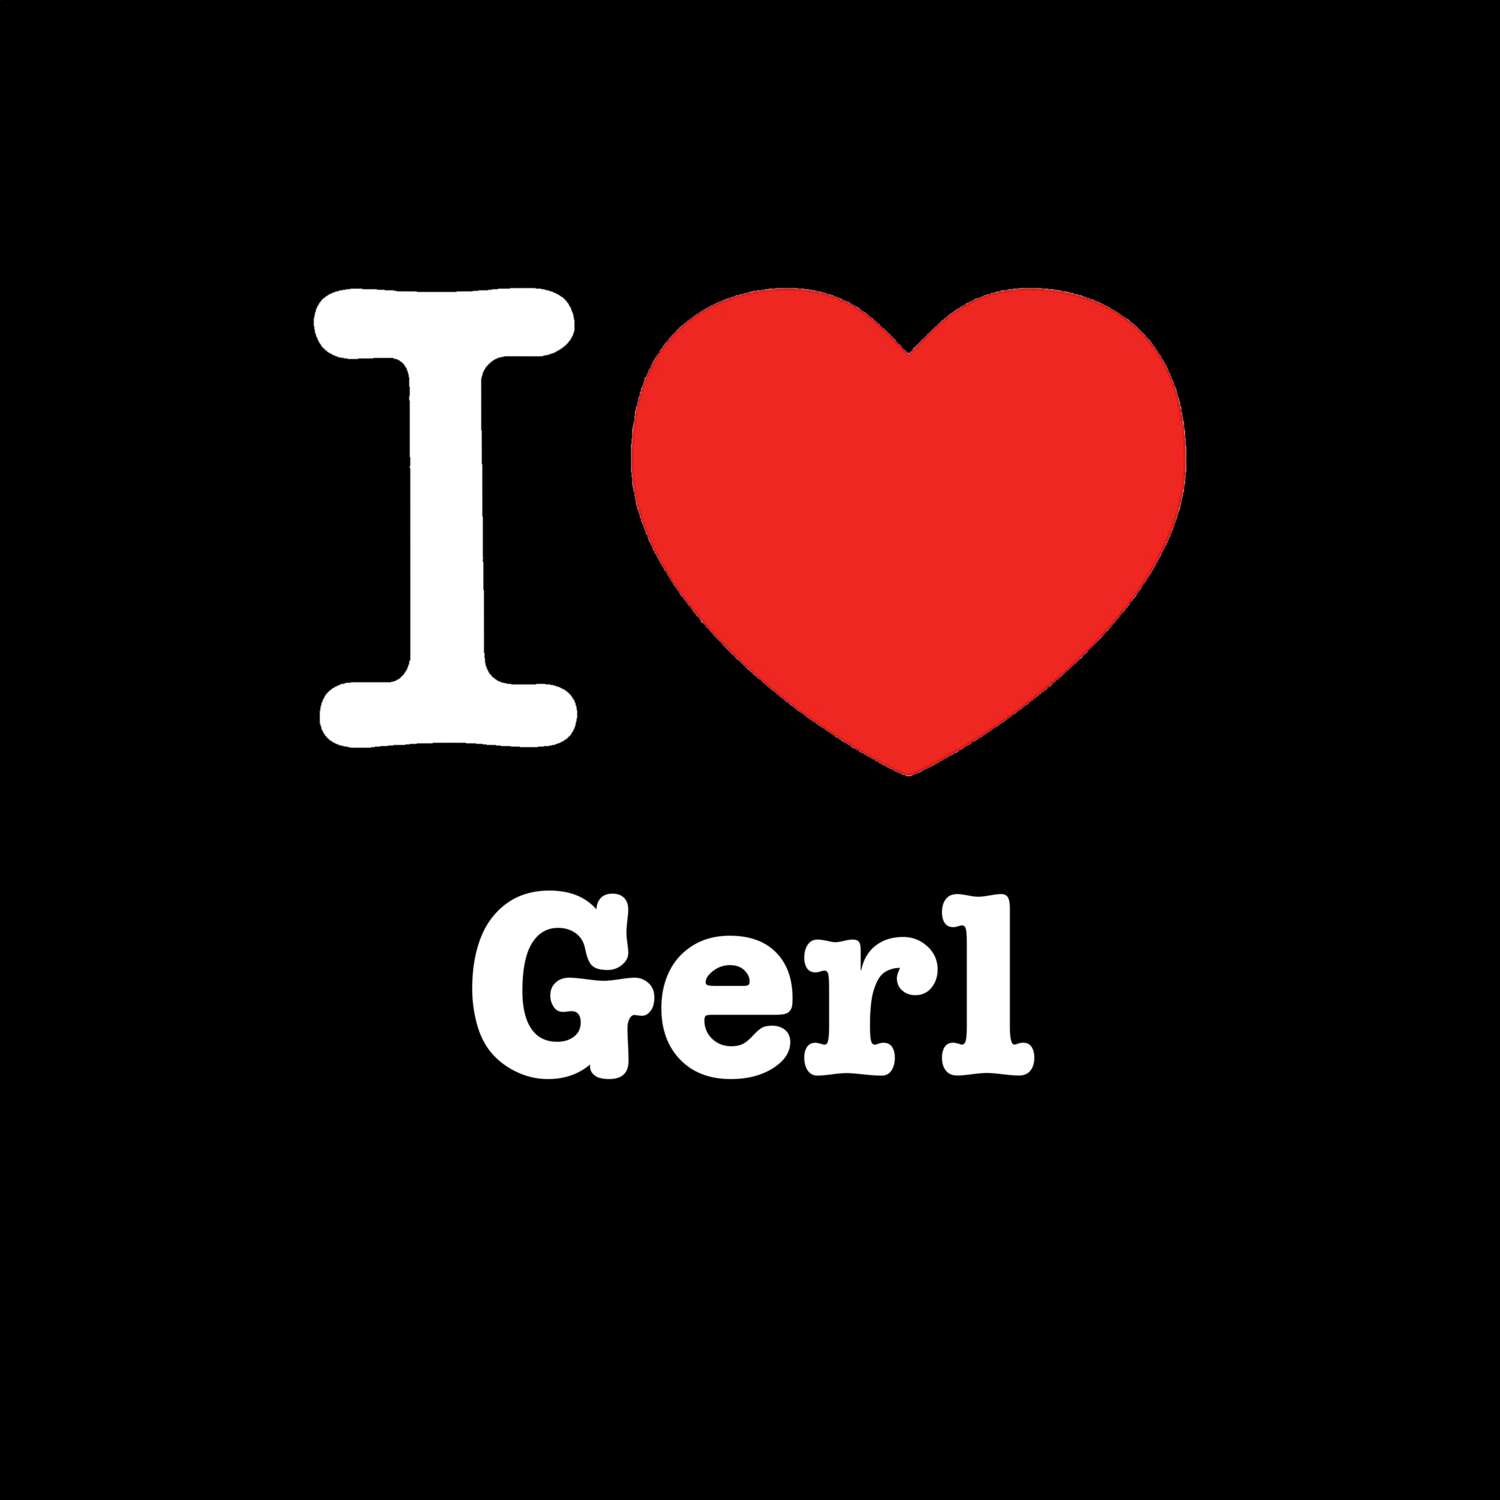 Gerl T-Shirt »I love«